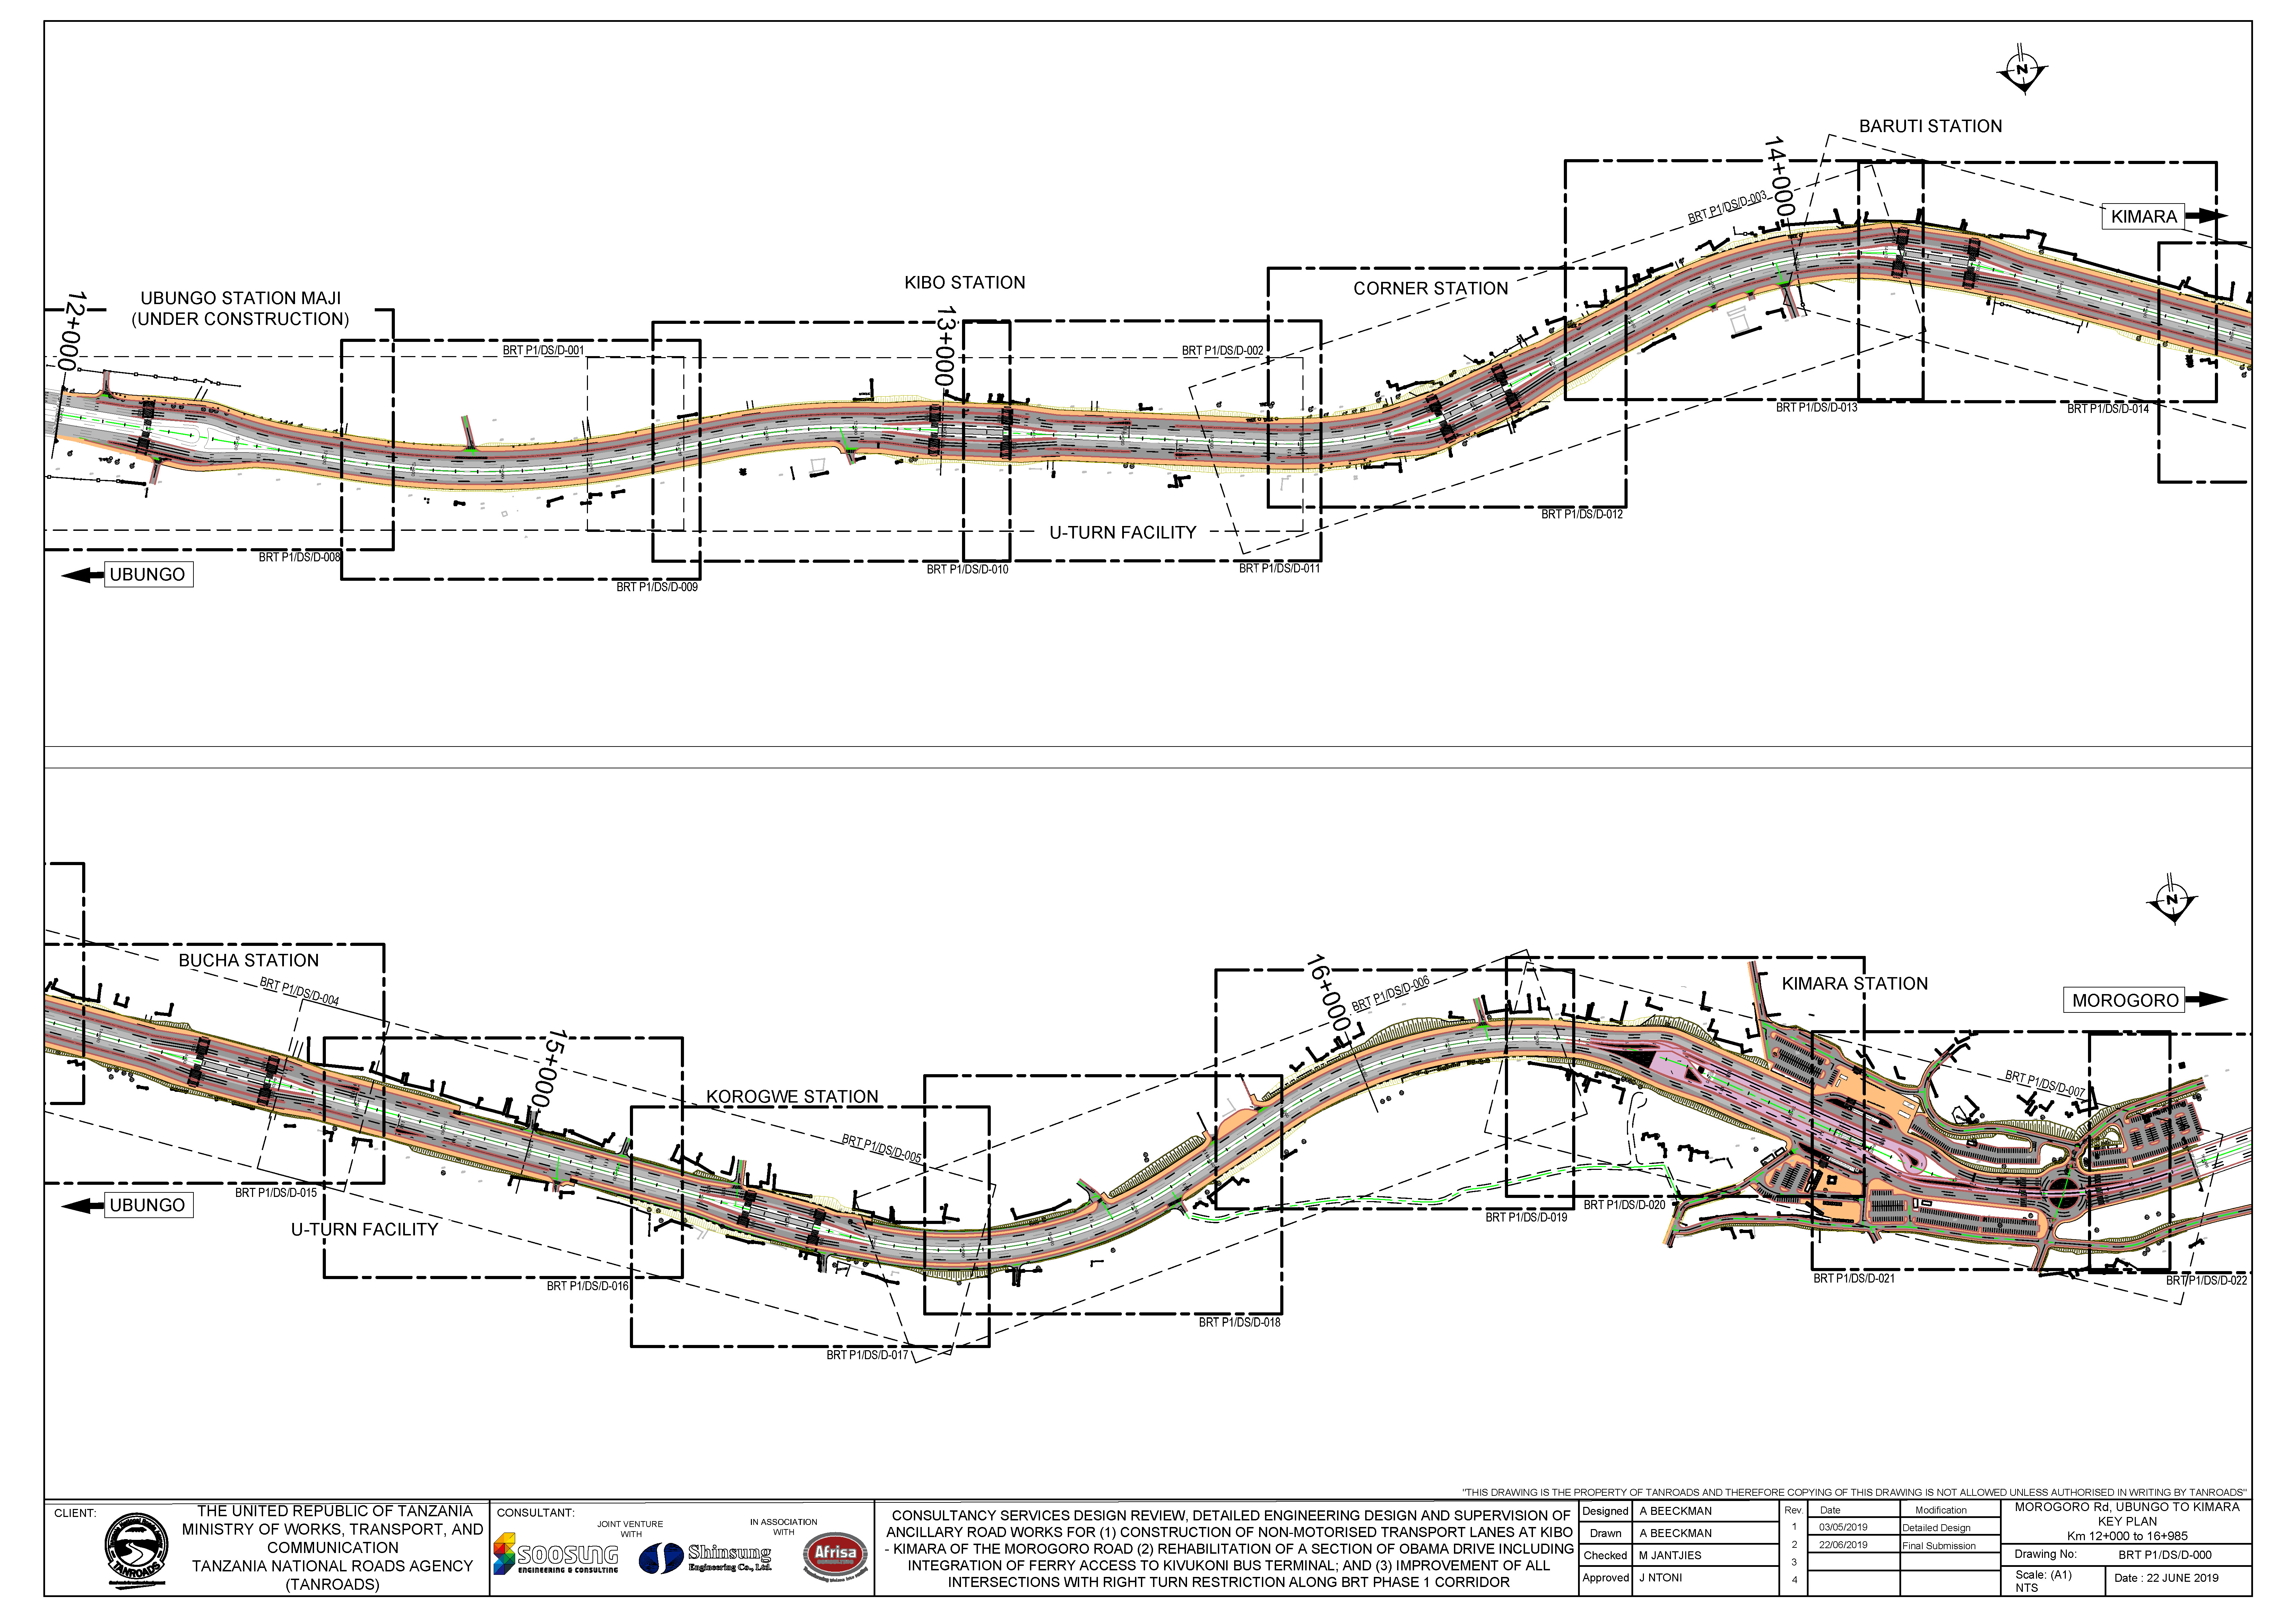 IDA-59570: Dar es Salaam Urban Transport Improvement Project (DUPT)